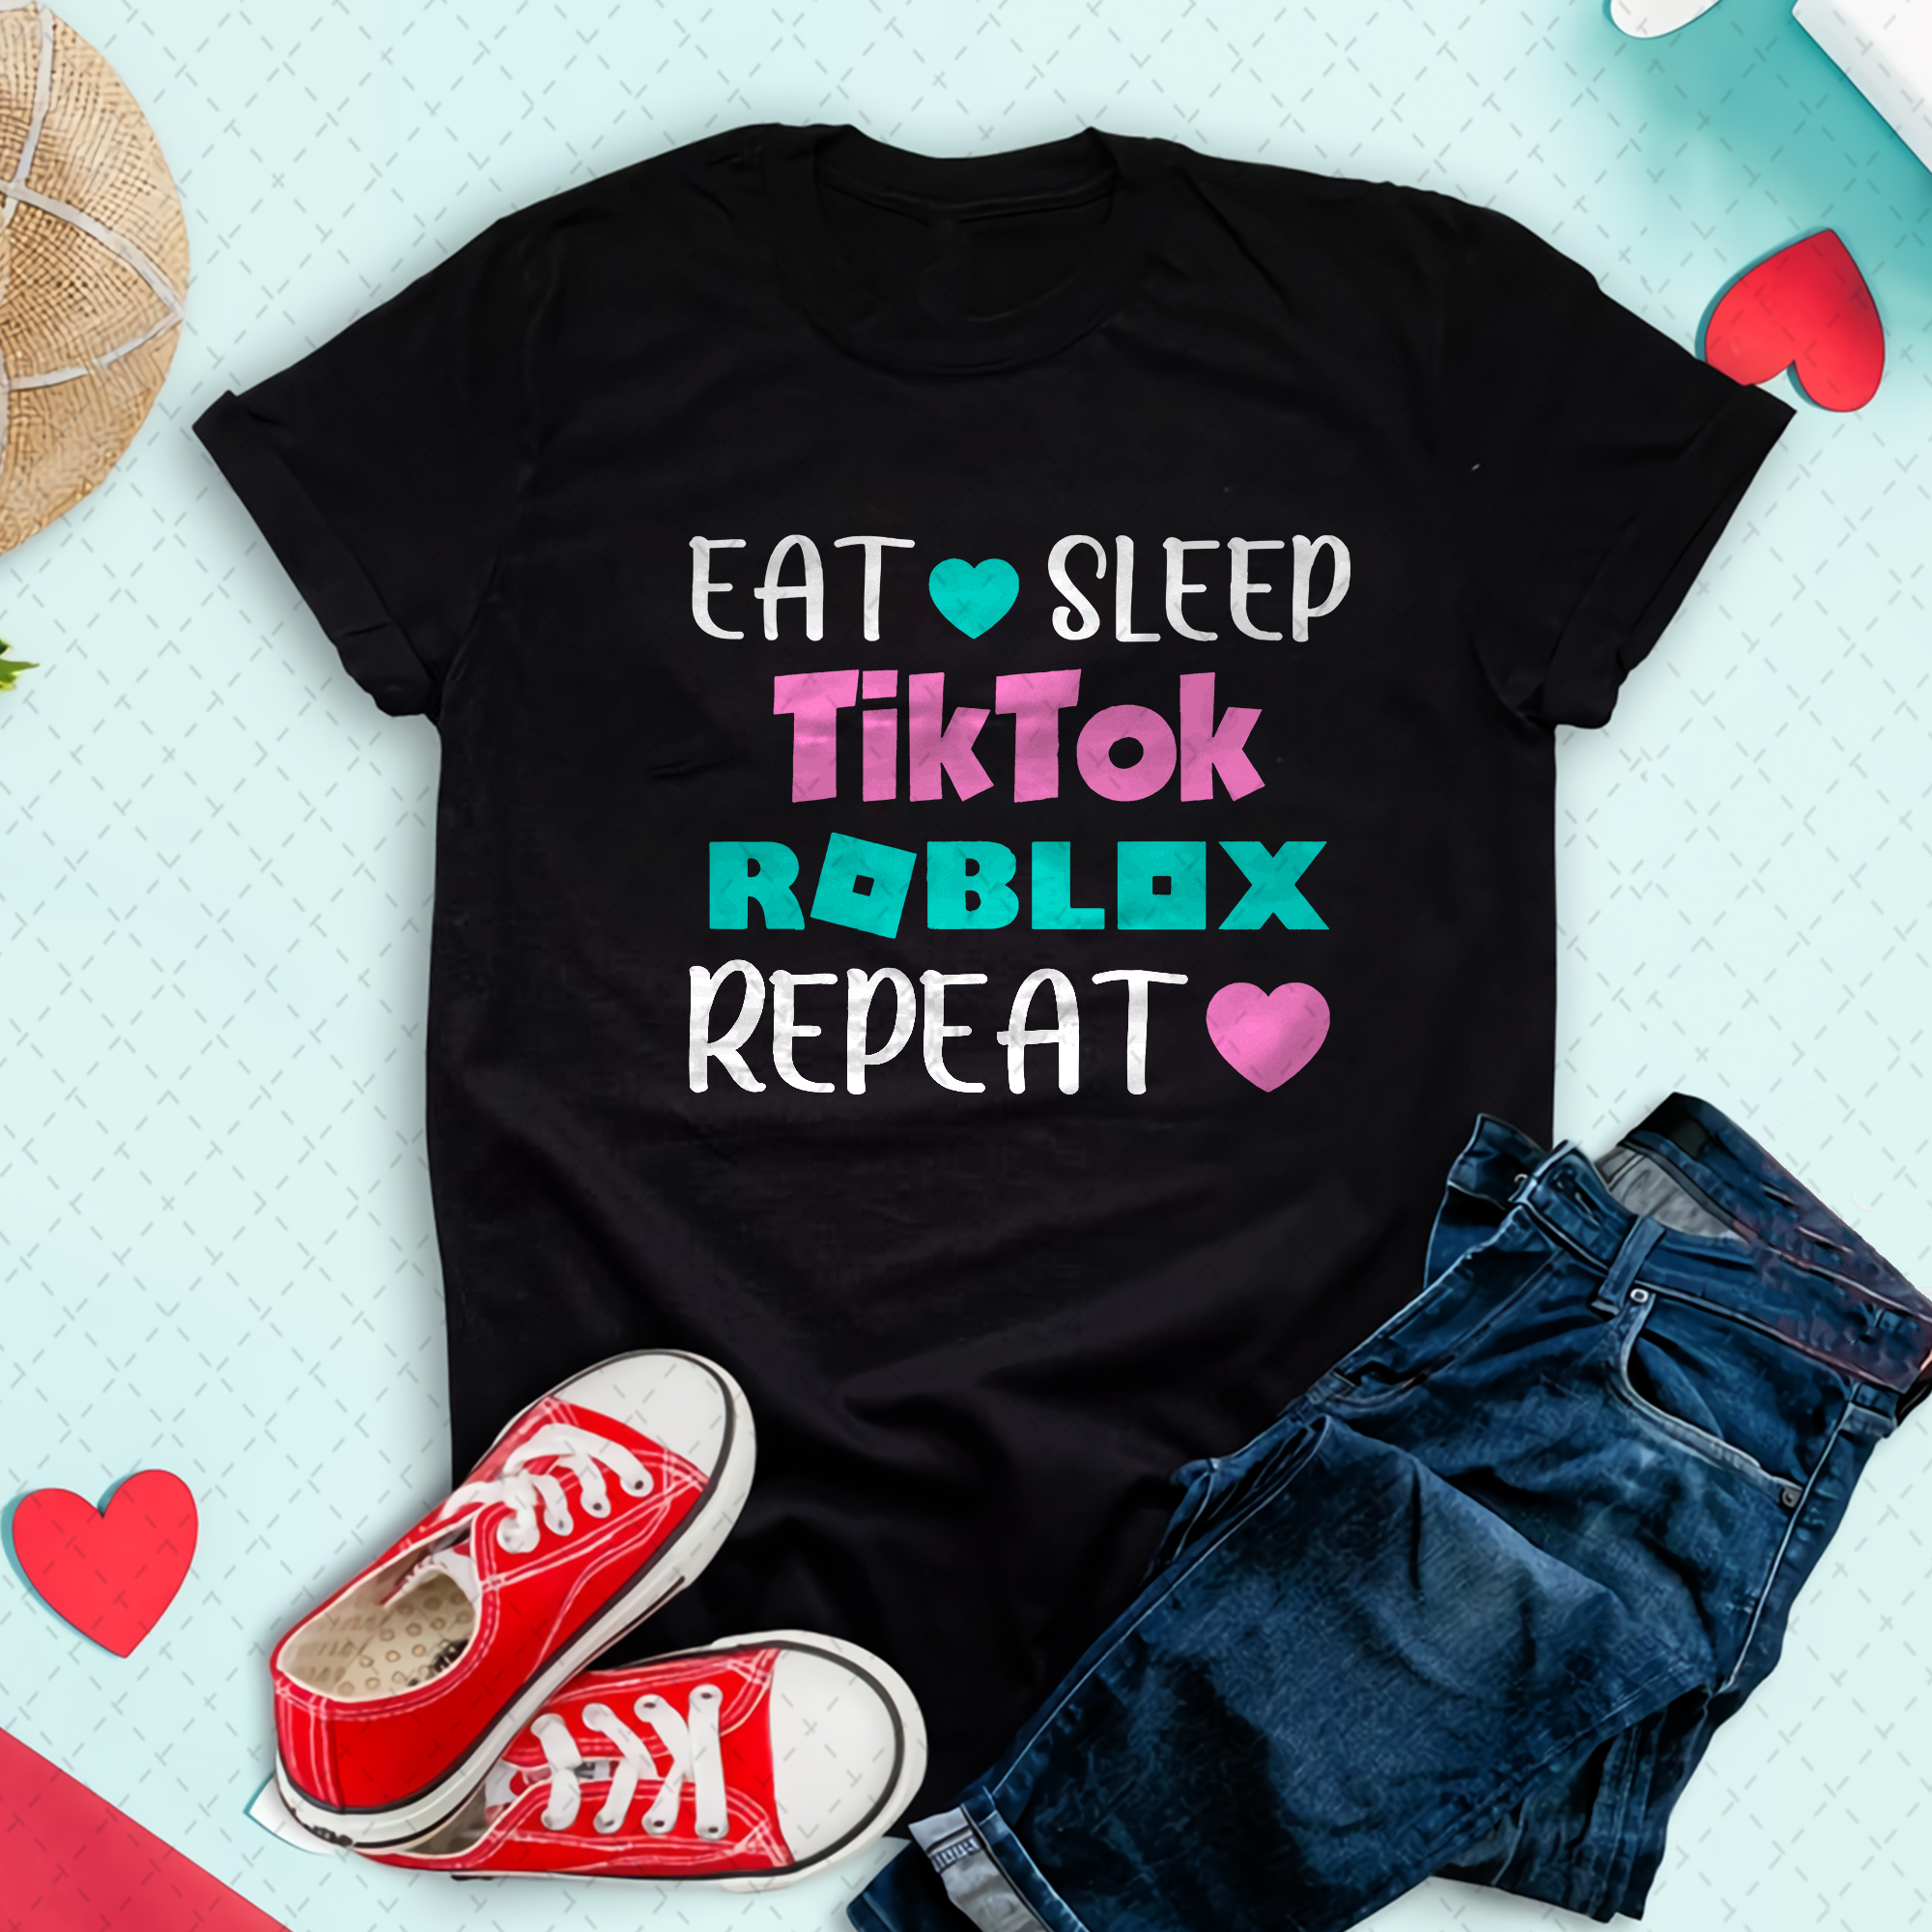 Eat Sleep TikTok Roblox Repeat. TikTok Shirt. Roblox Shirt. Gamer. Dance Life. TikTok Lover. Vlogger. Roblox Birthday. TikTok Birthday